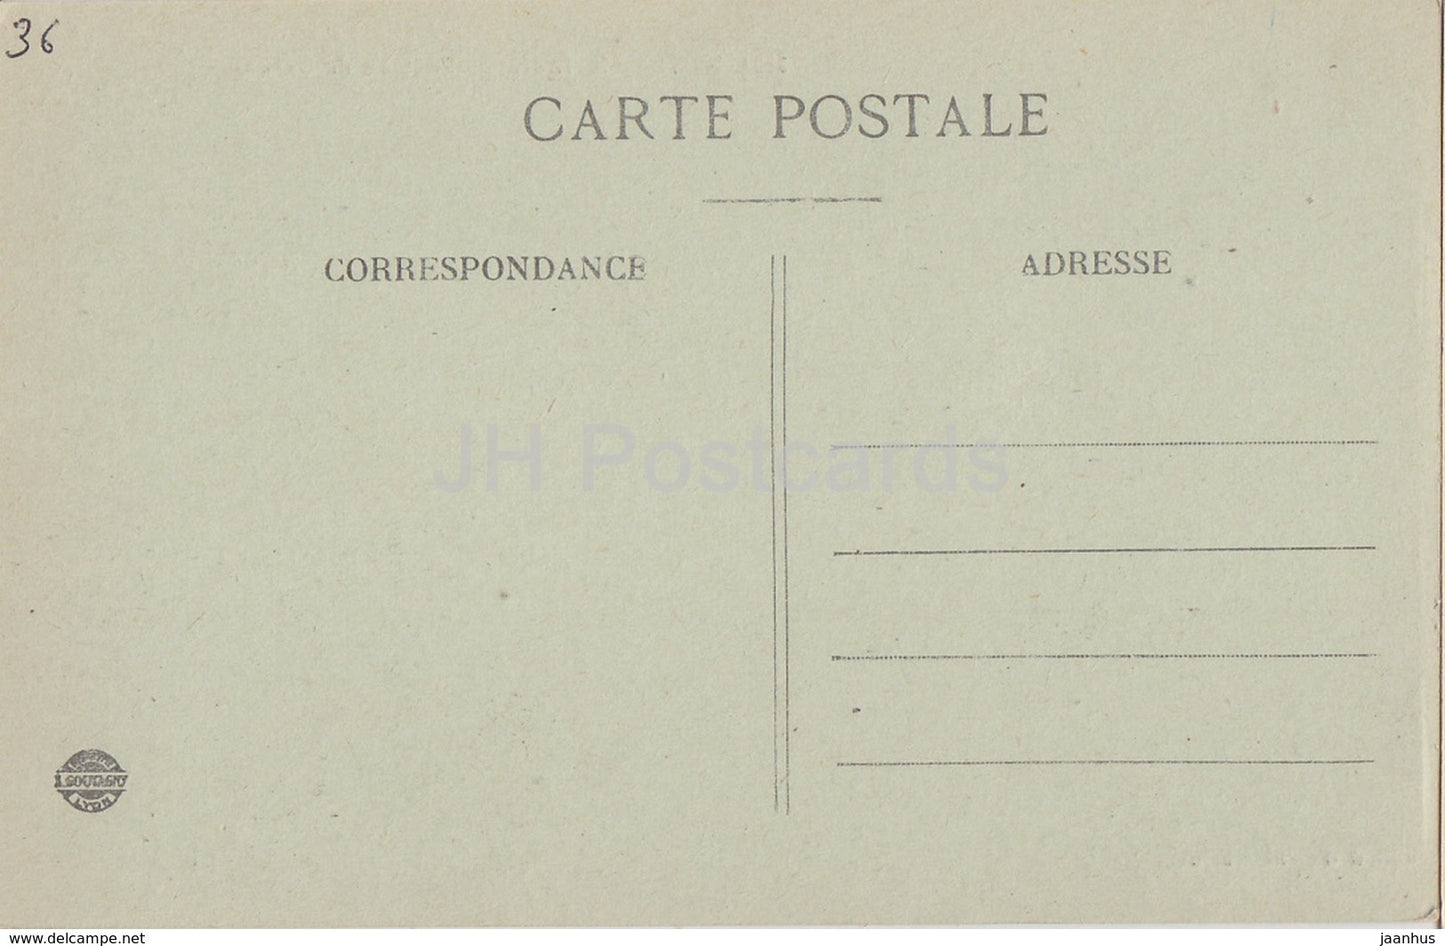 Niherne - Chateau de Rancay - castle - 3323 - old postcard - France - unused